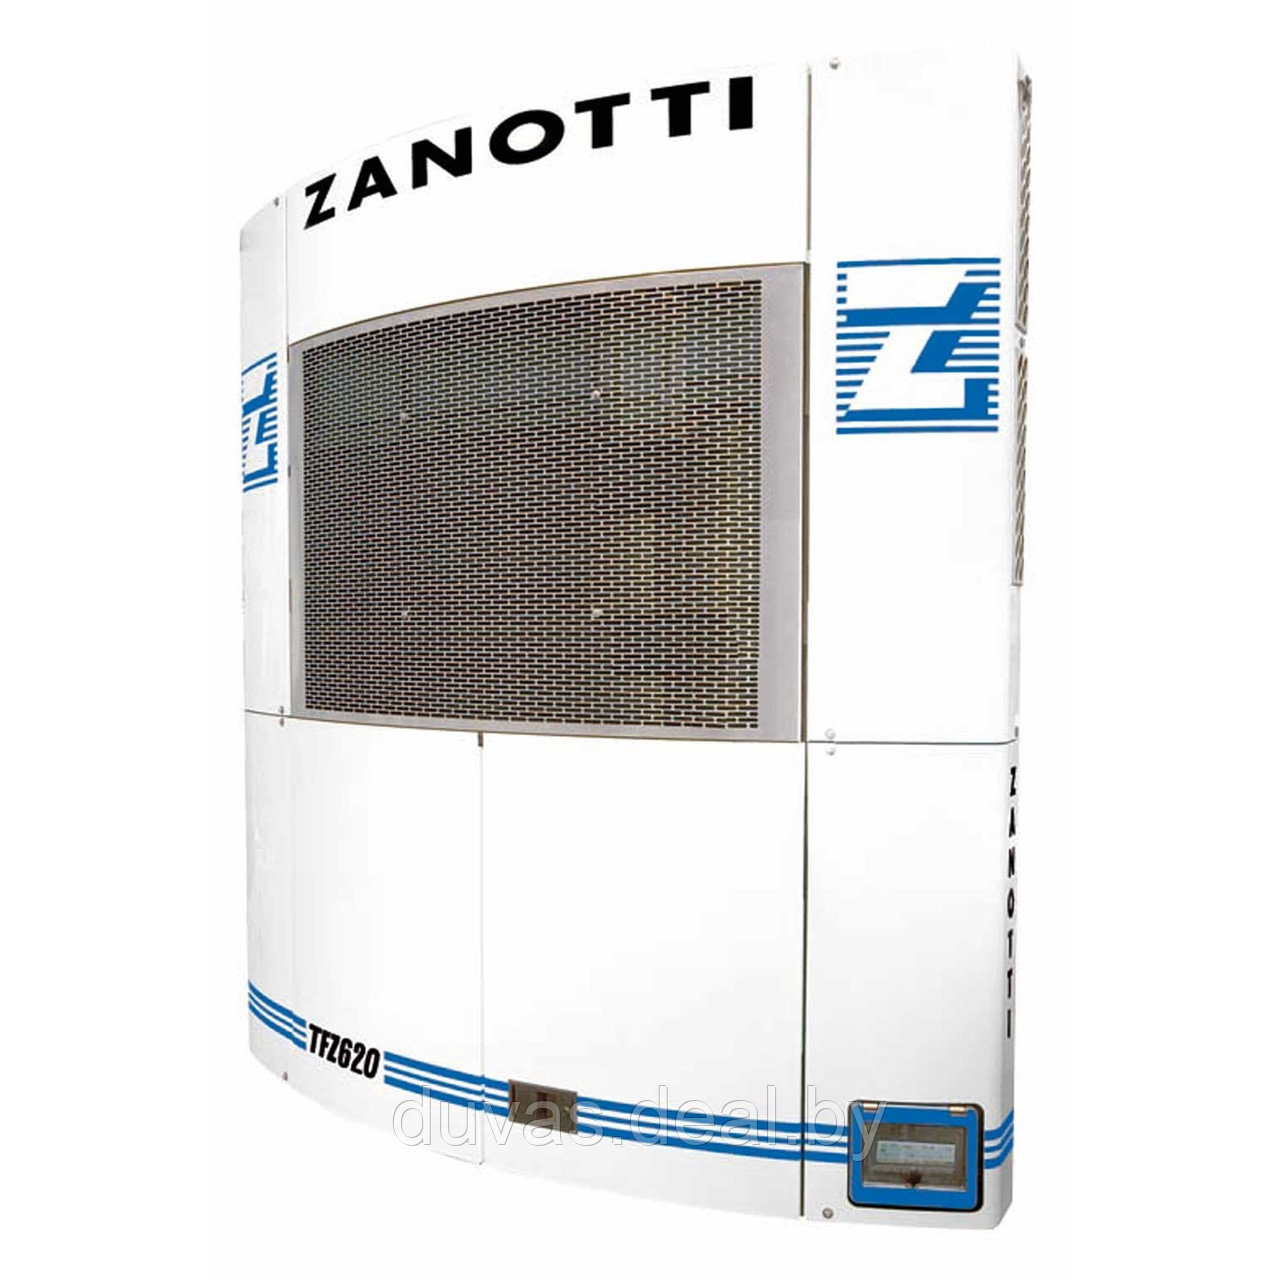 Холодильный агрегат Zanotti (Занотти) TFZ620